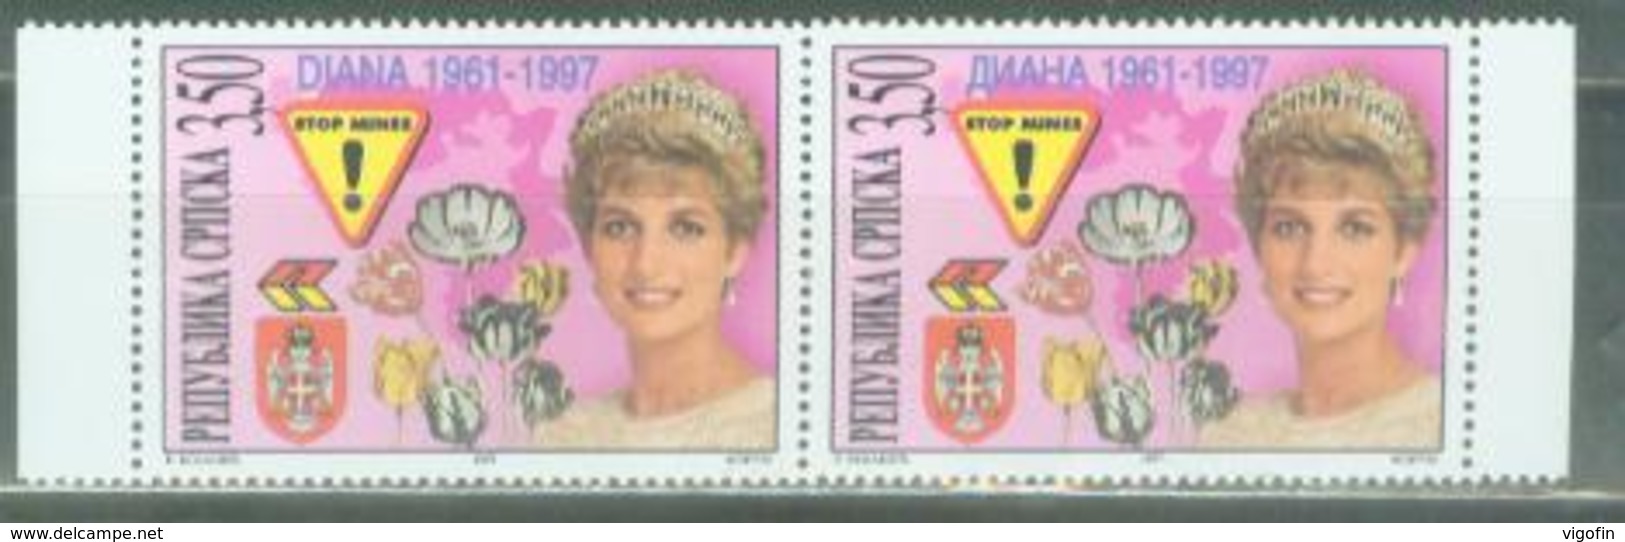 BHRS 1997-71-2 Lady "D", BOSNA AND HERZEGOVINA R.SRPSKA, 2v, MNH - Royalties, Royals